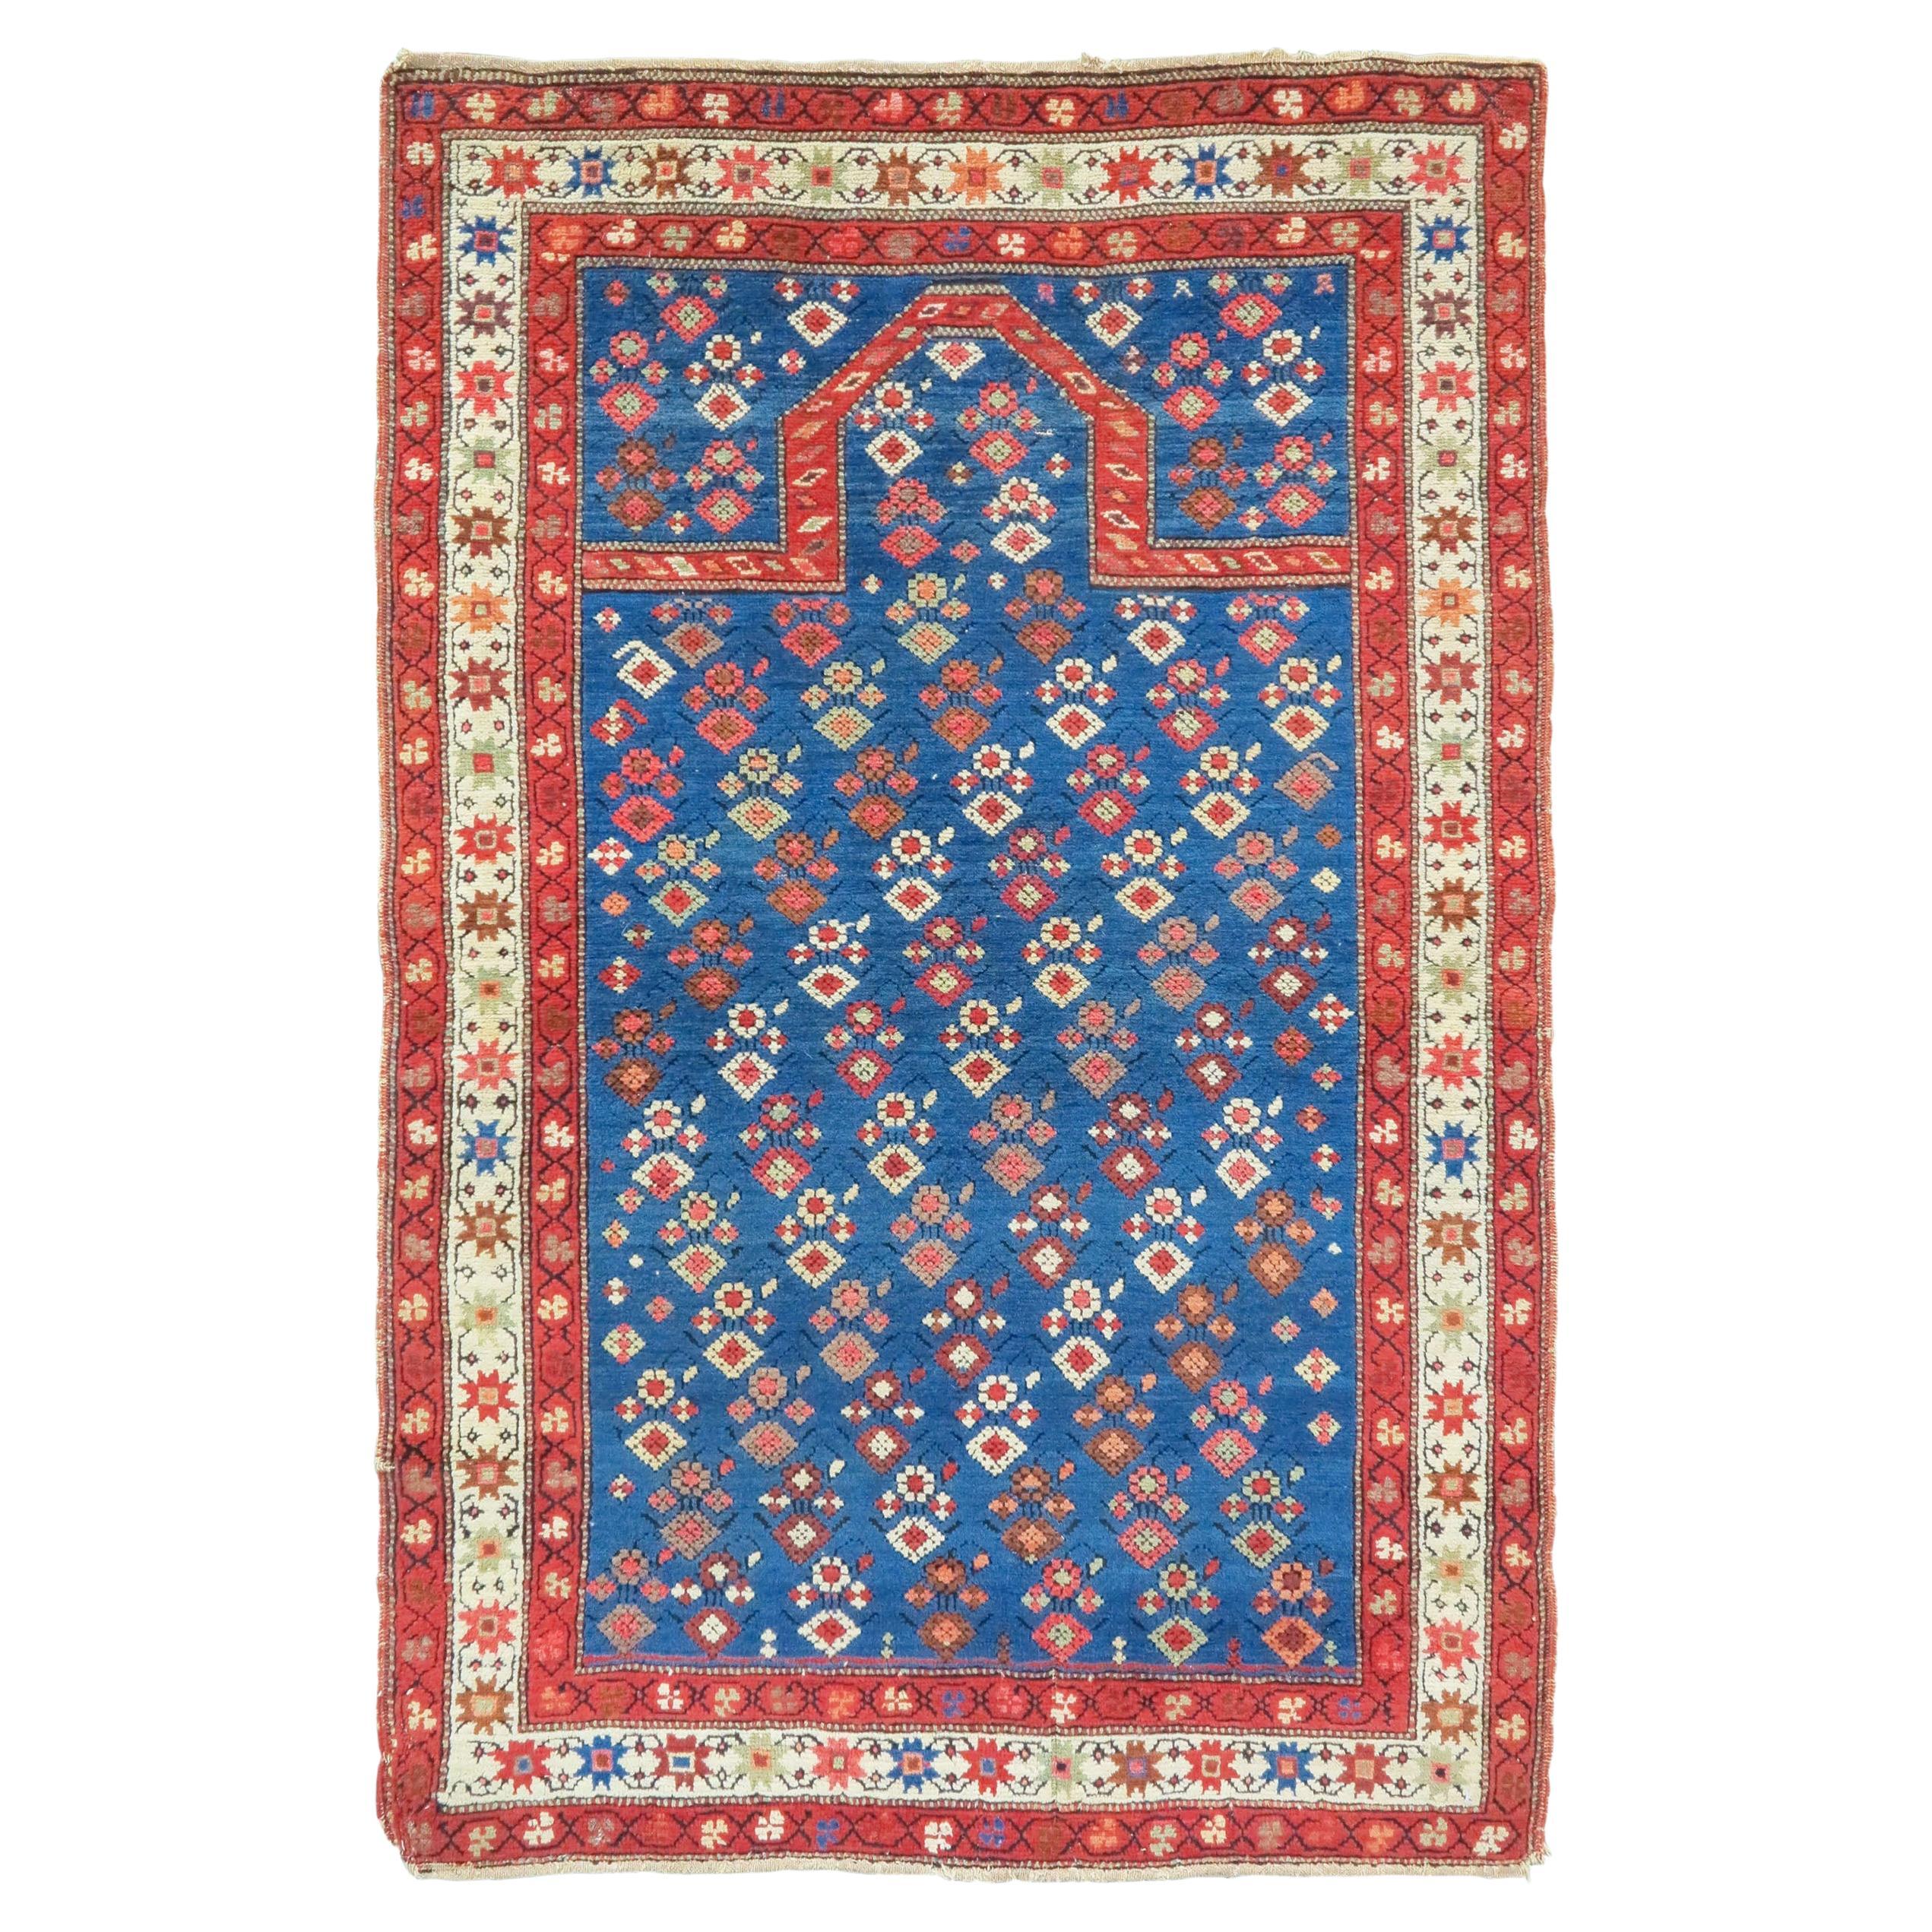 Antique Caucasian Karabagh Prayer Rug, c. 1900